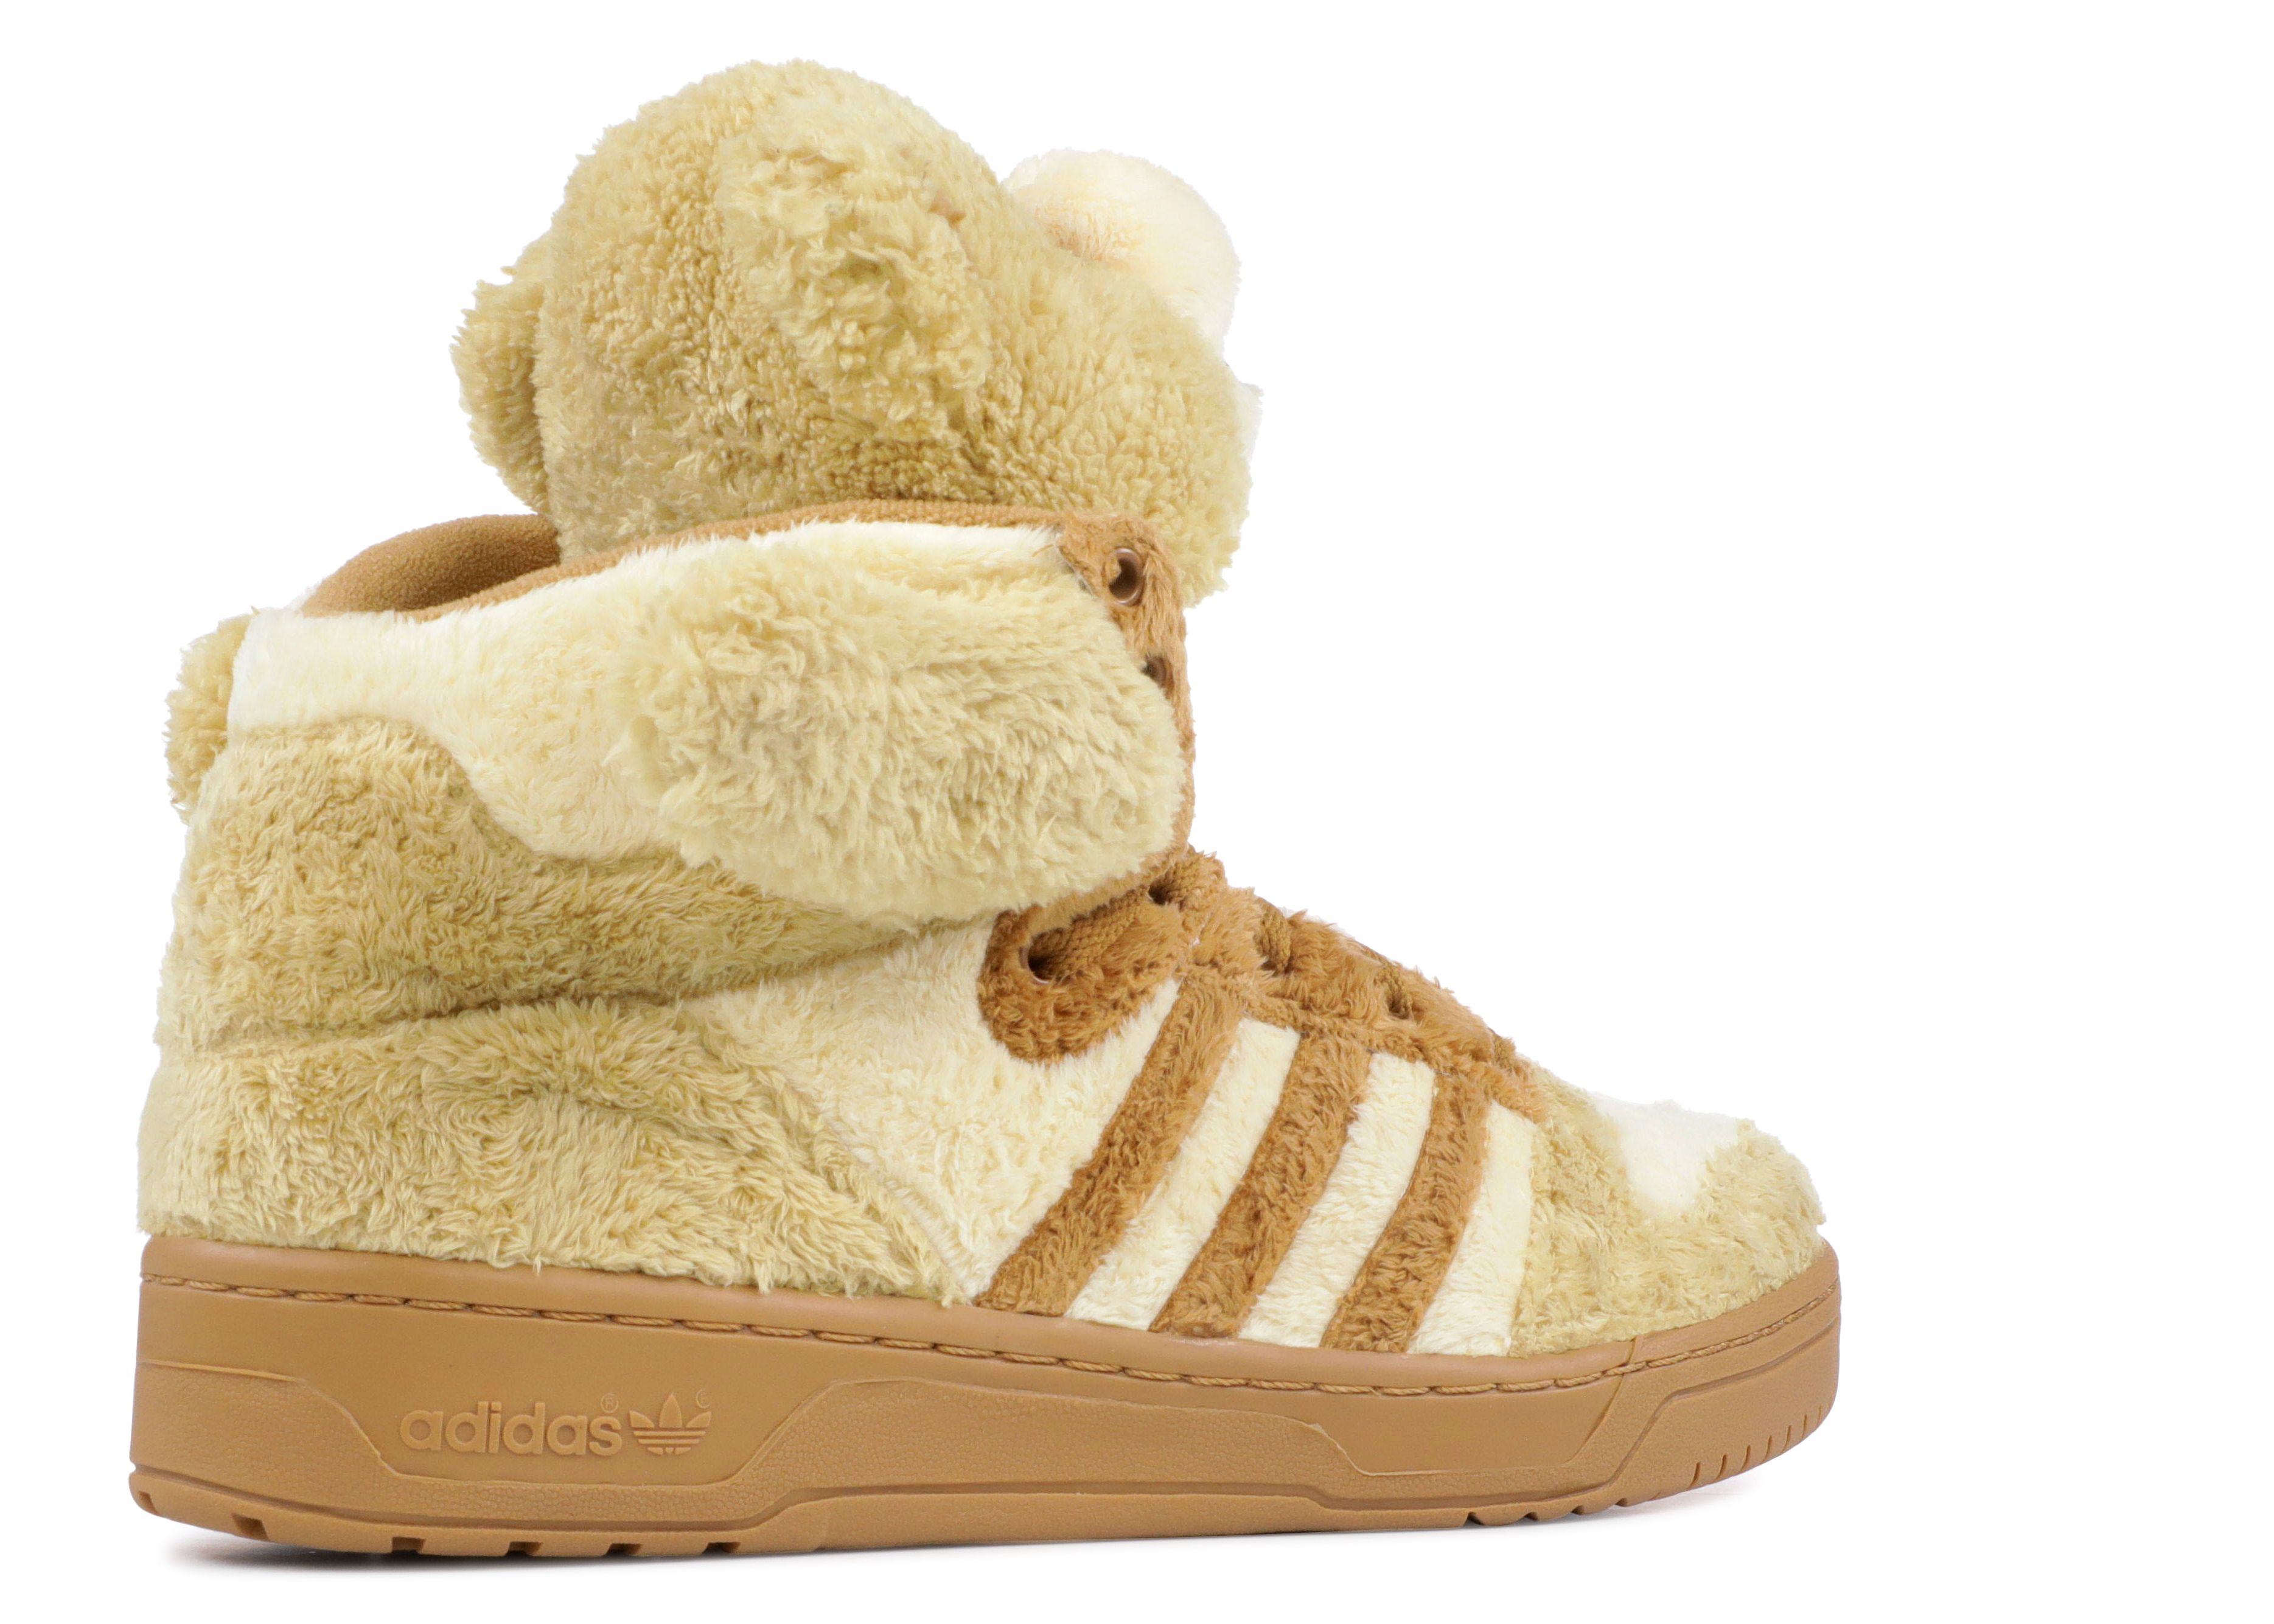 jeremy scott teddy bear shoes